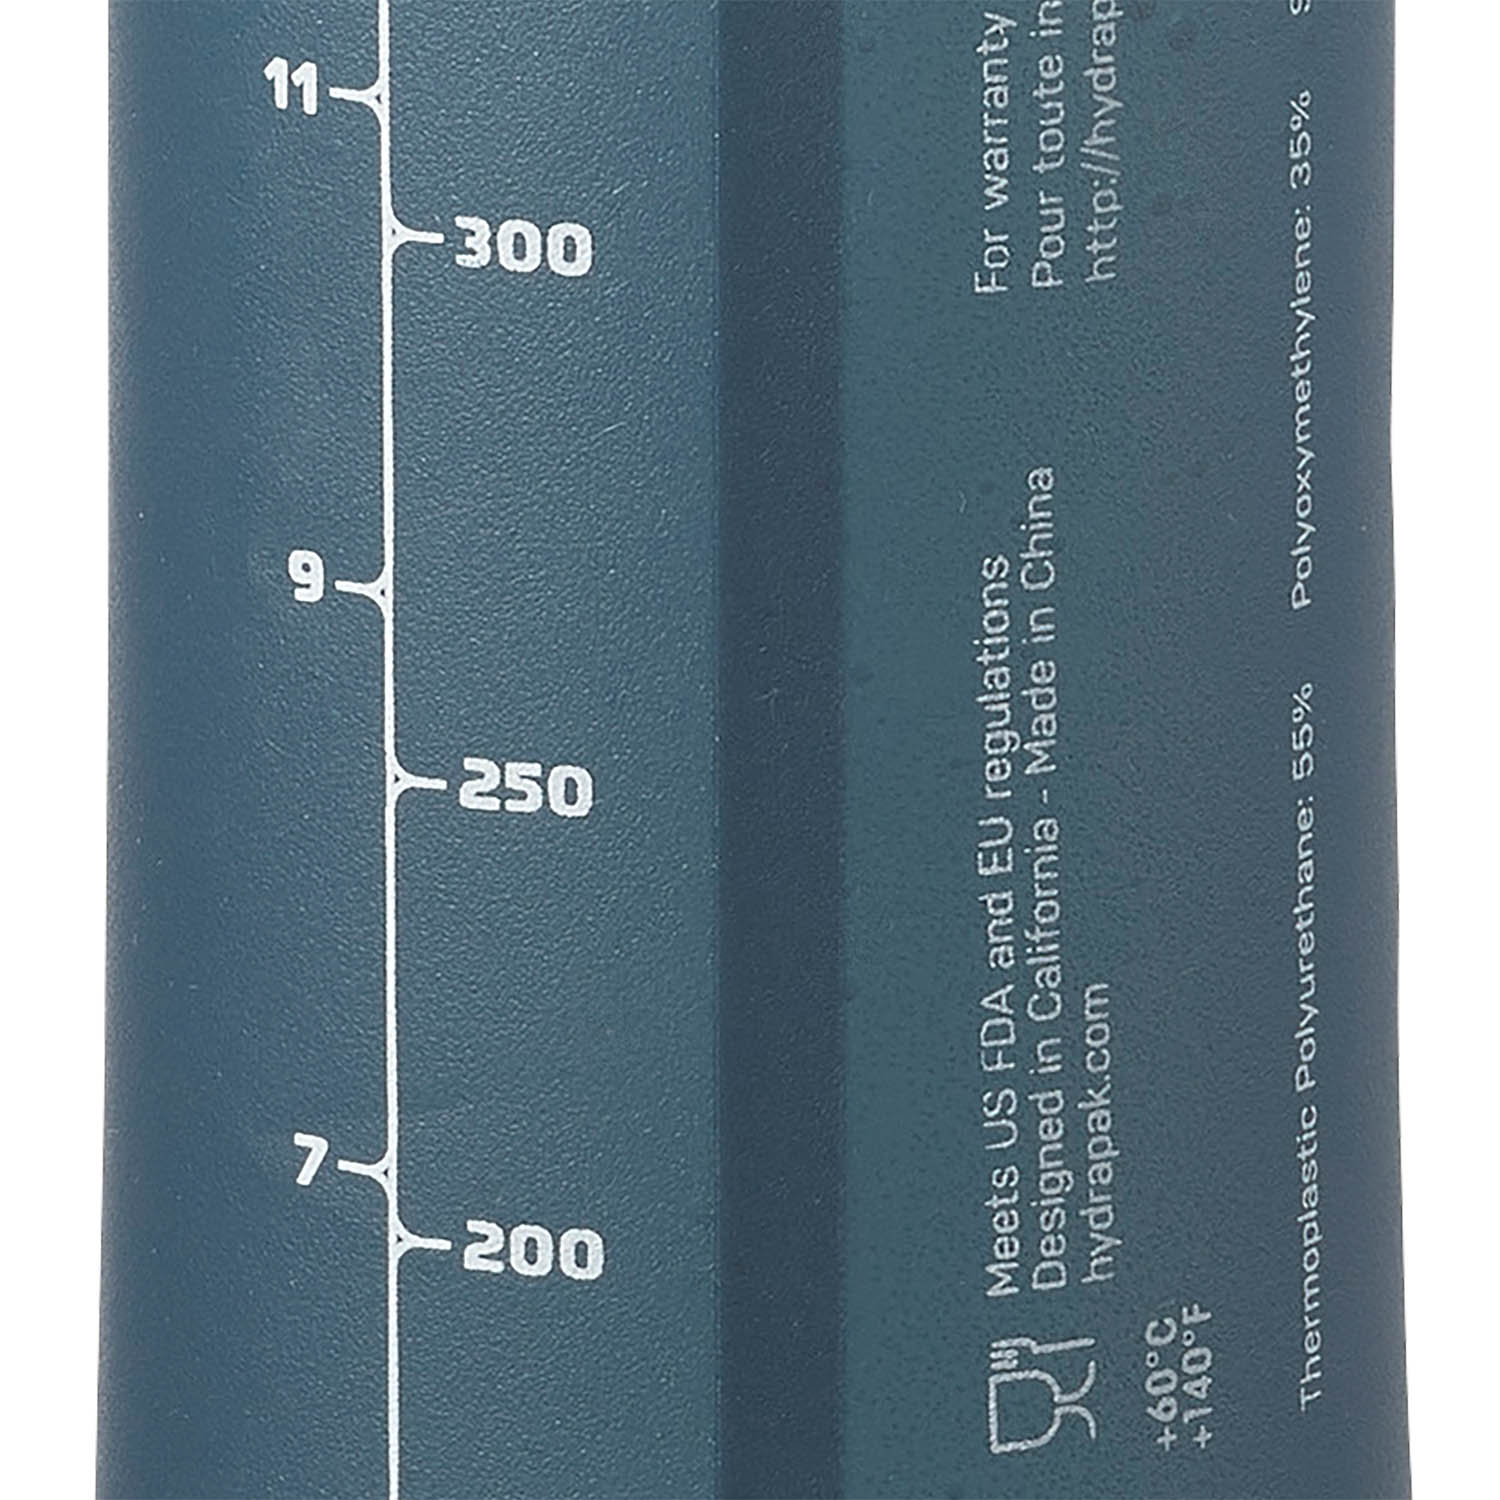 Salomon Soft Flask 500 ml Hydration Flask - Slate Grey